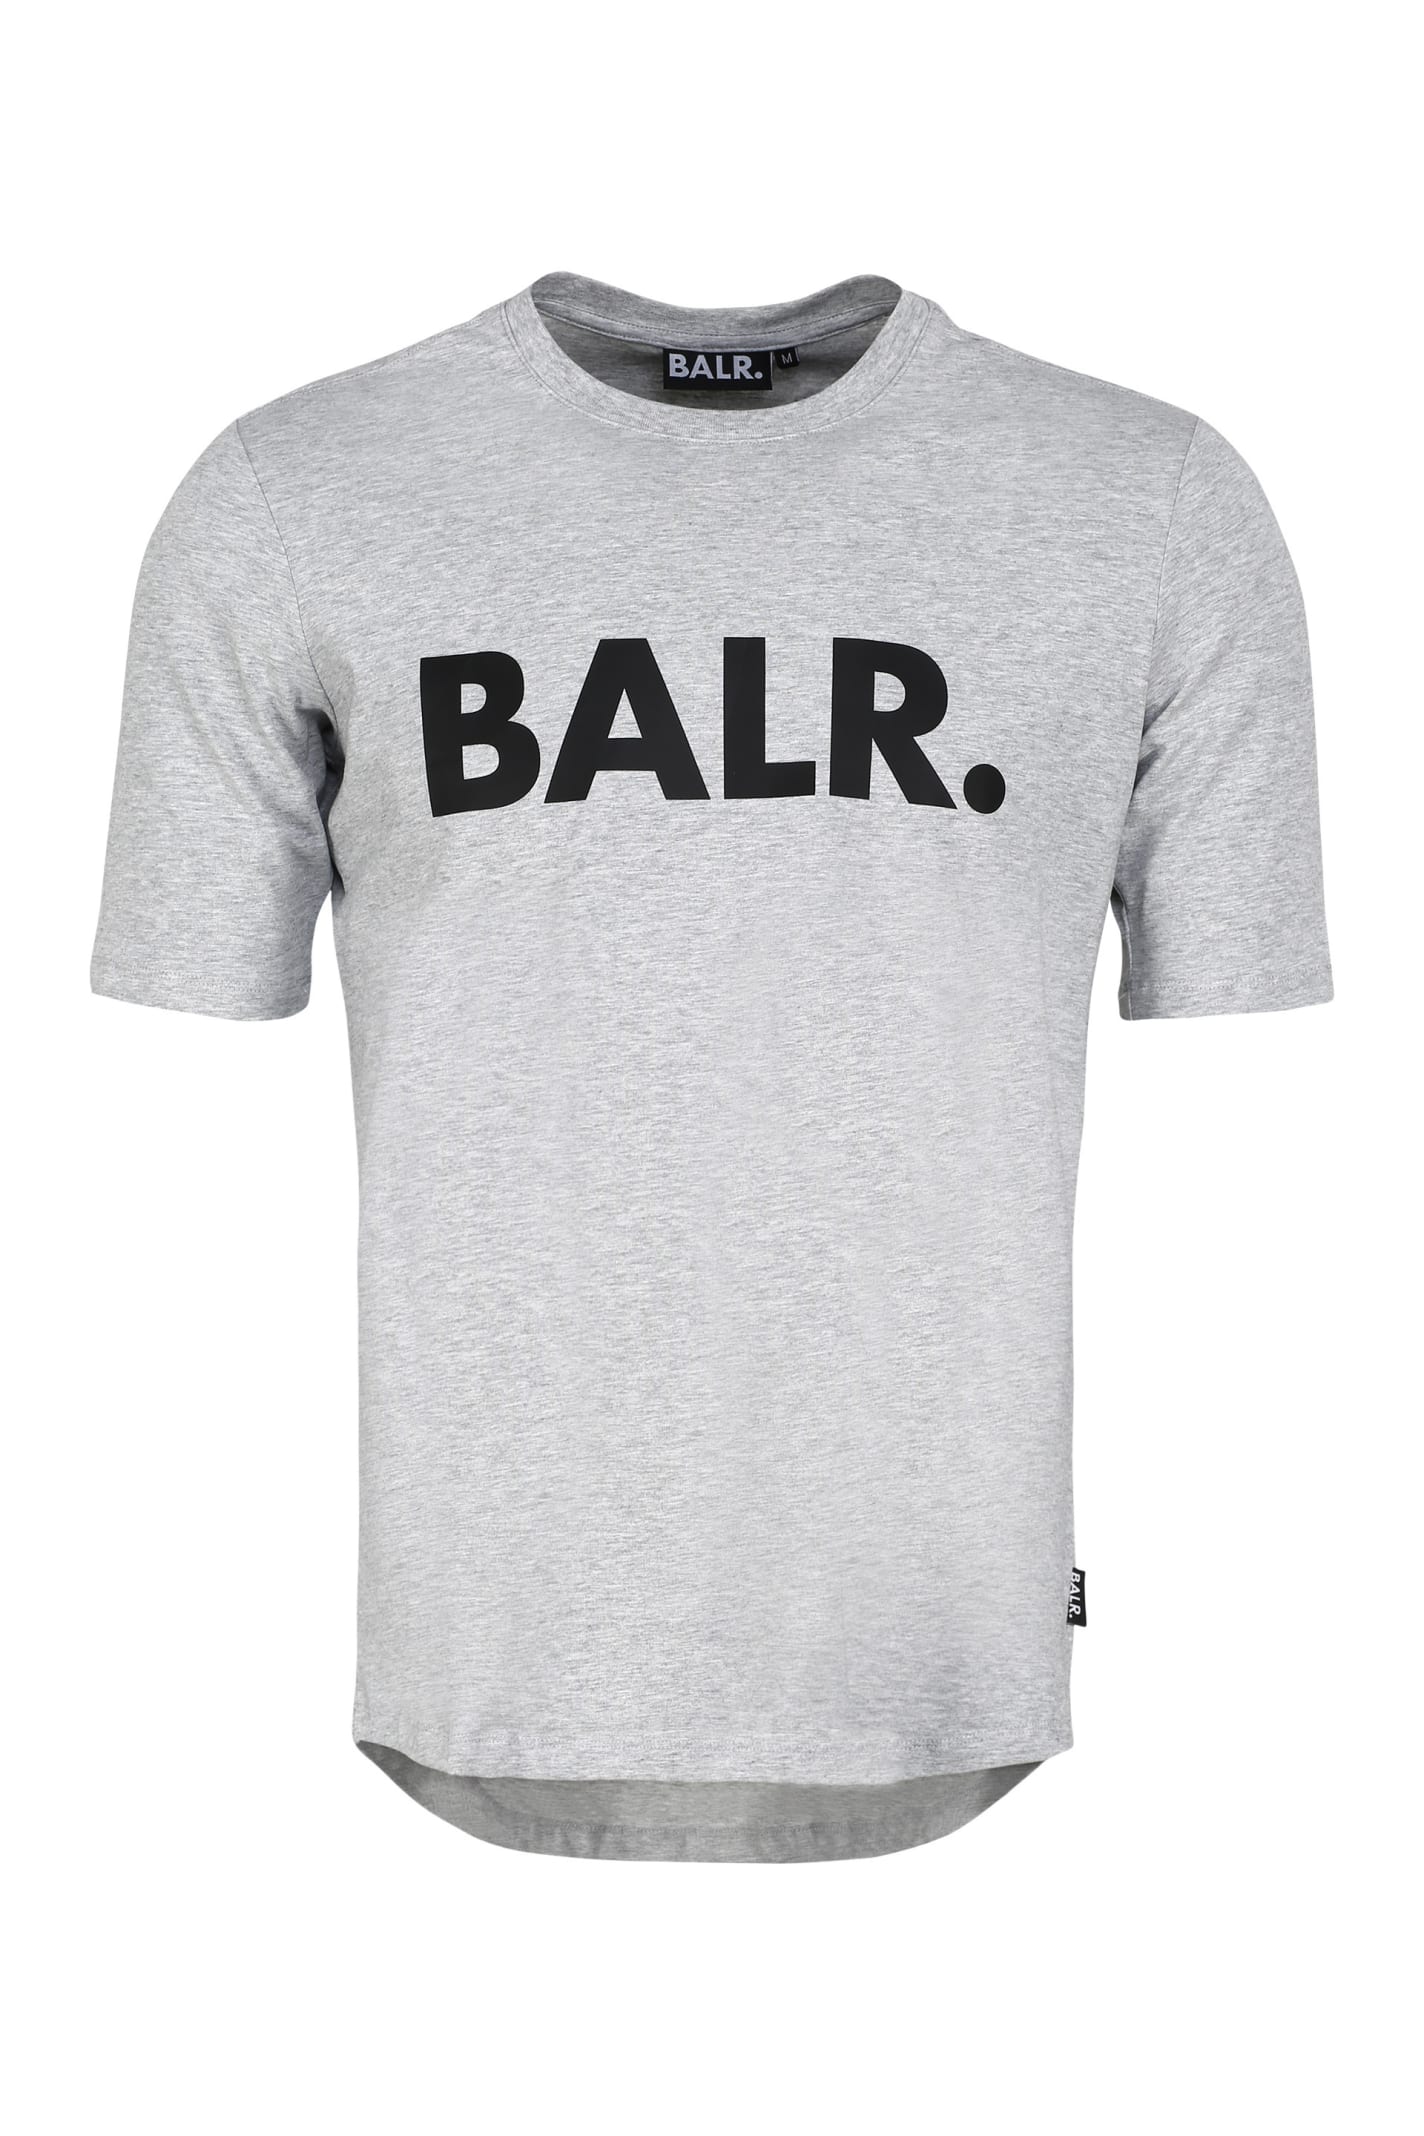 Balr. Logo Print Cotton T-shirt In Grey | ModeSens